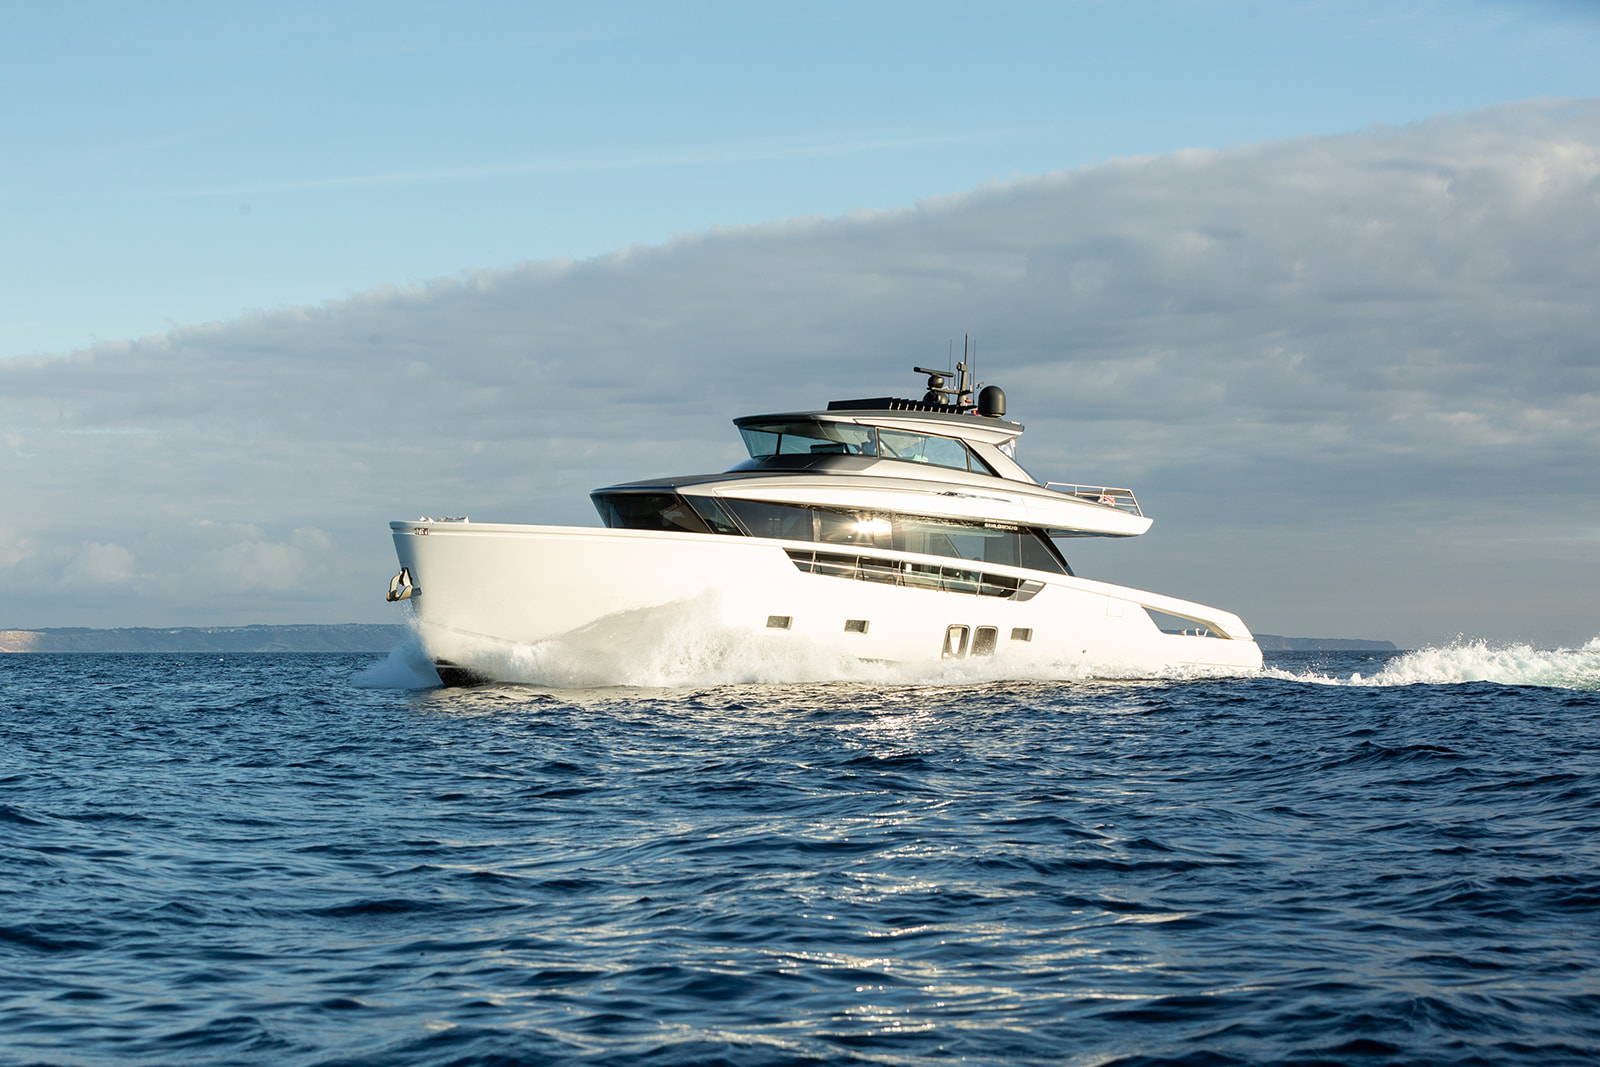 Power boat FOR CHARTER, year 2019 brand San Lorenzo and model SX76, available in Marina Port de Mallorca Palma Mallorca España